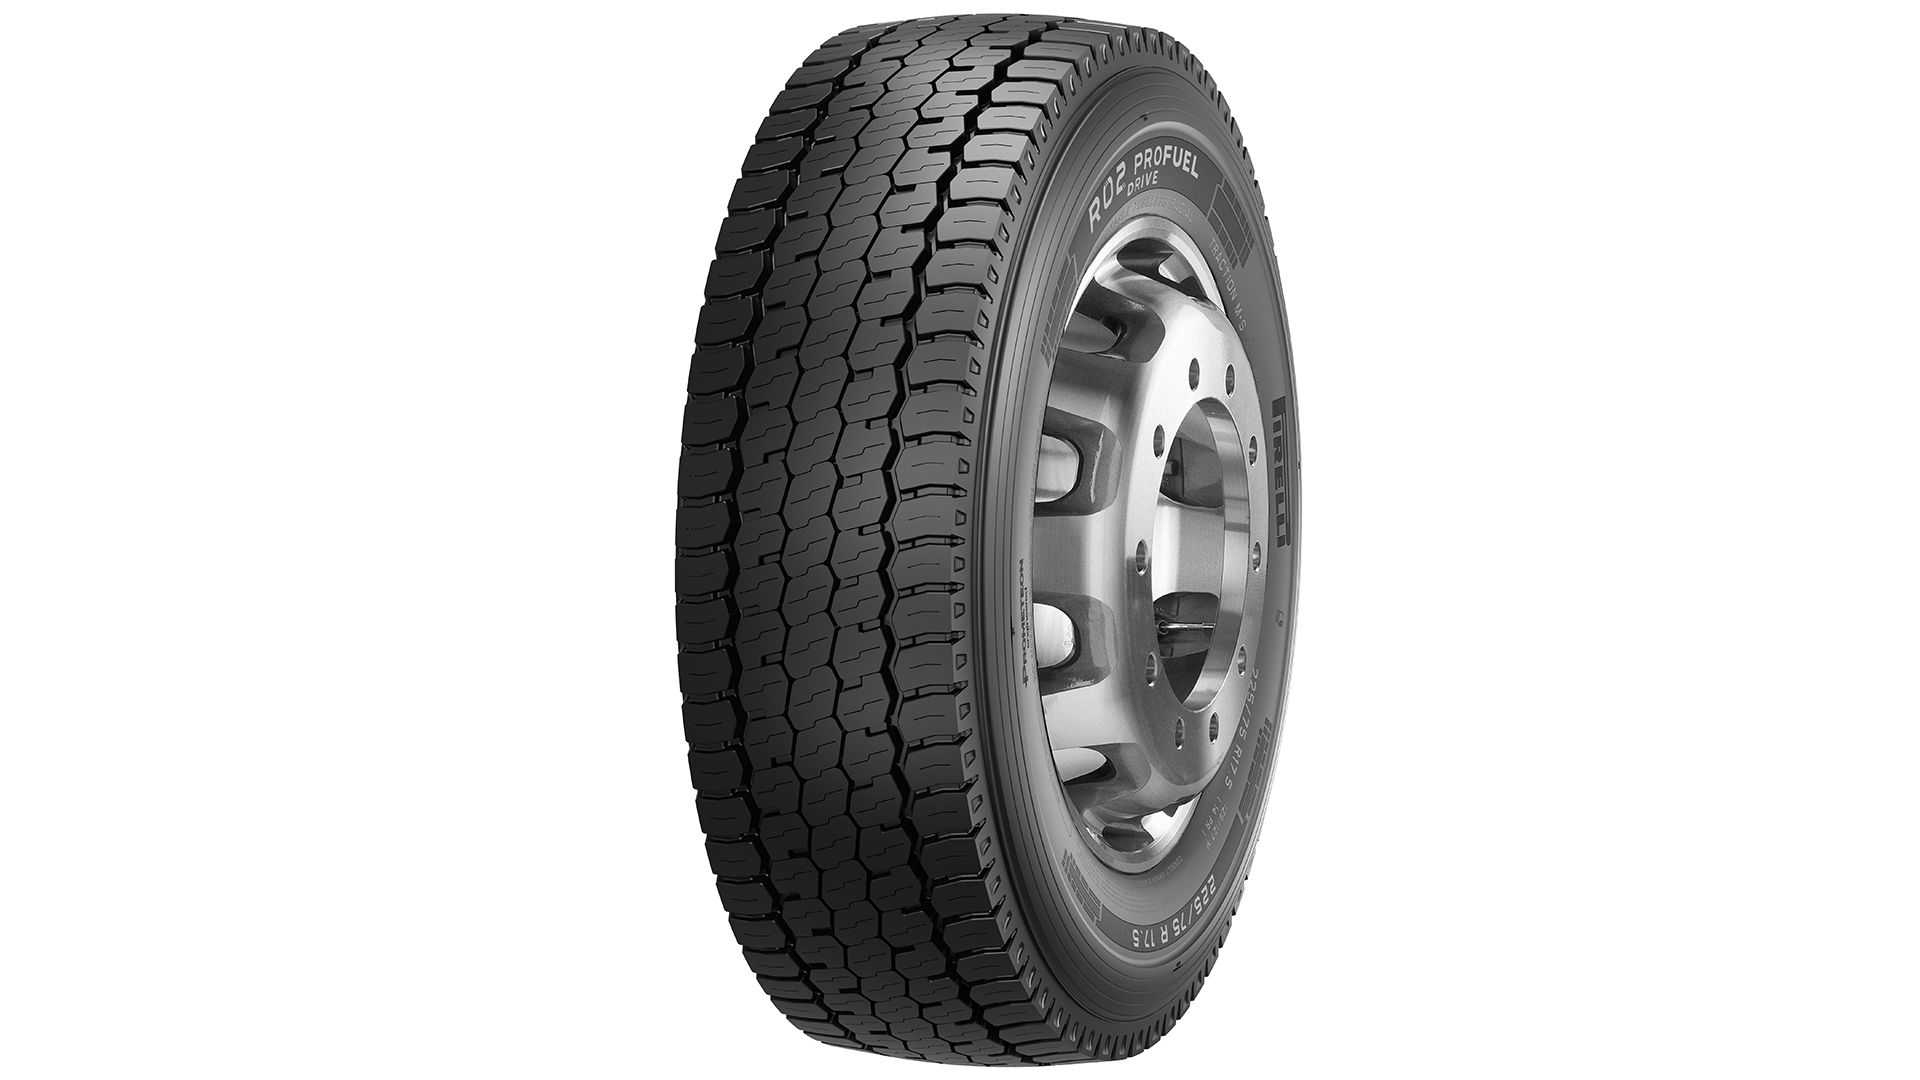 Gomme Nuove Pirelli 215/75 R17.5 126/124M R02 PROFUEL D M+S (8.00mm) pneumatici nuovi Estivo